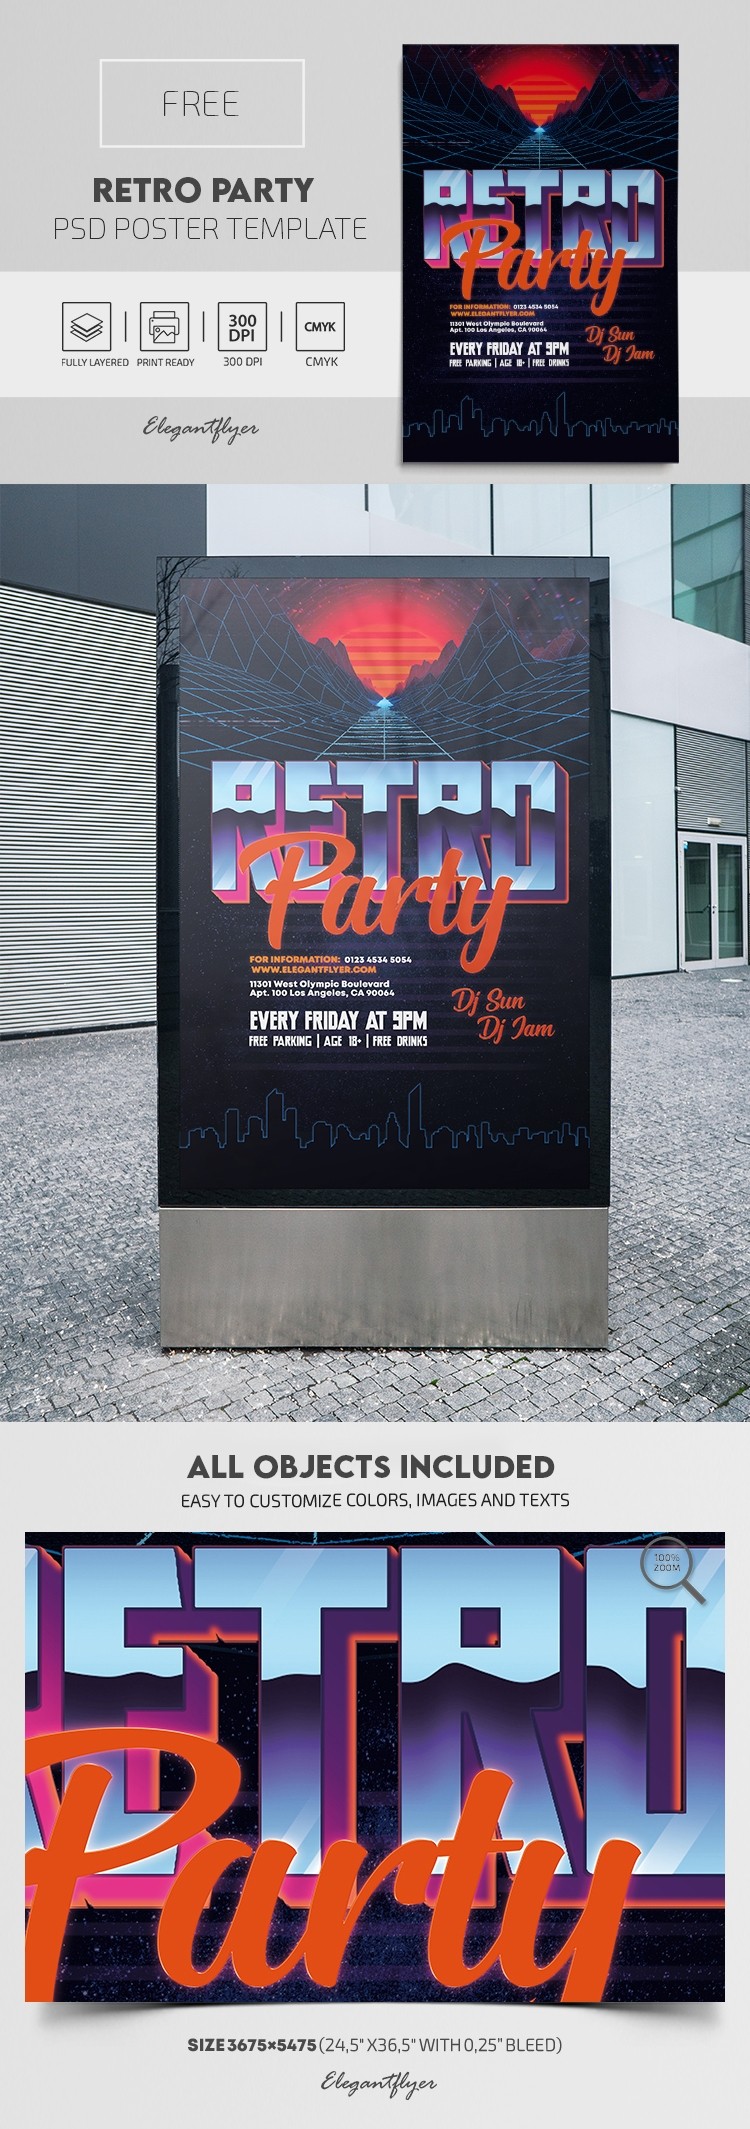 Retro Party Poster by ElegantFlyer